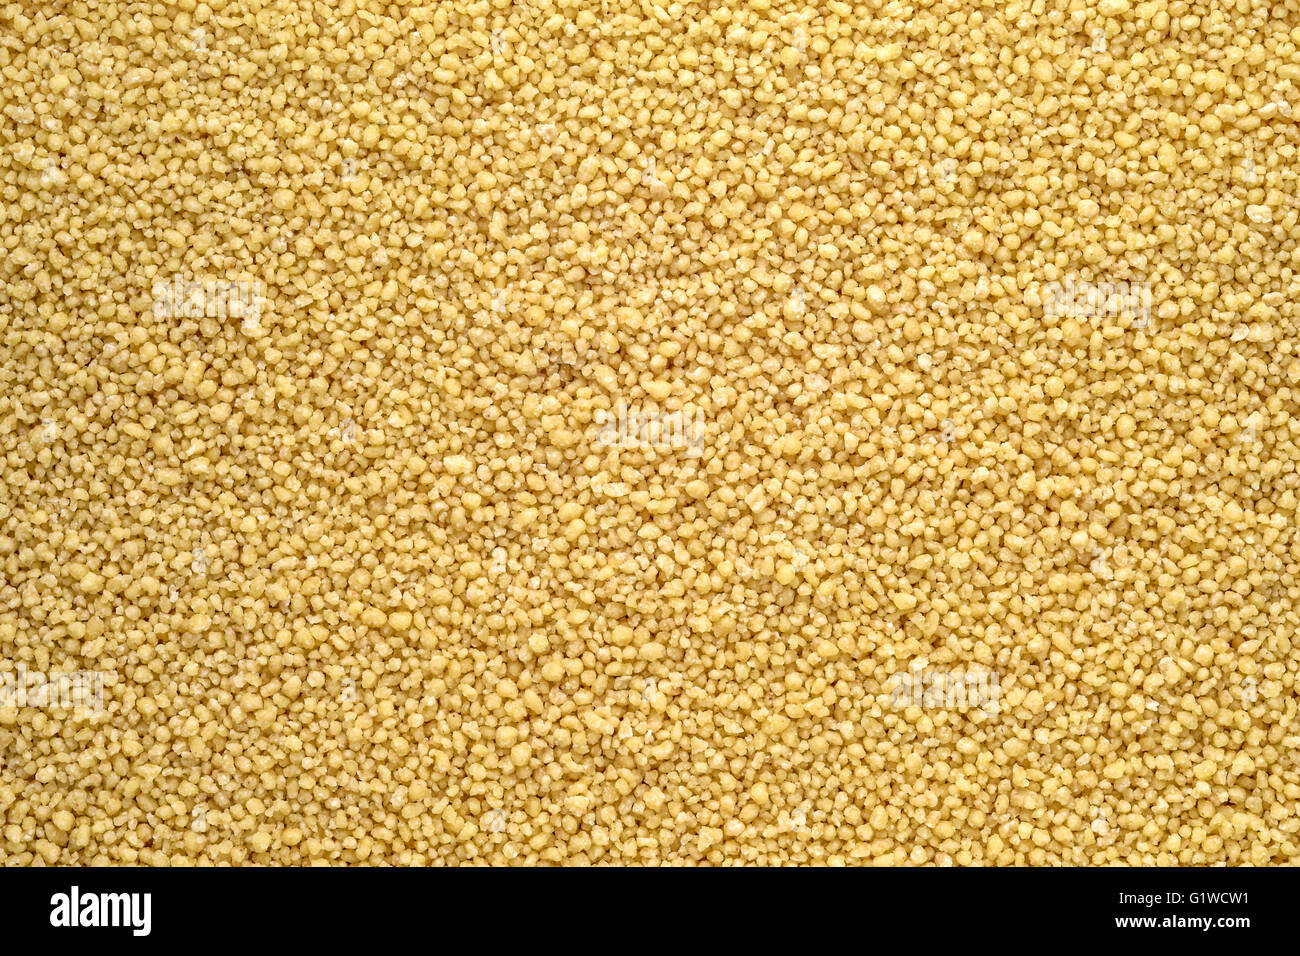 Couscous crudo texture di sfondo closeup Foto Stock